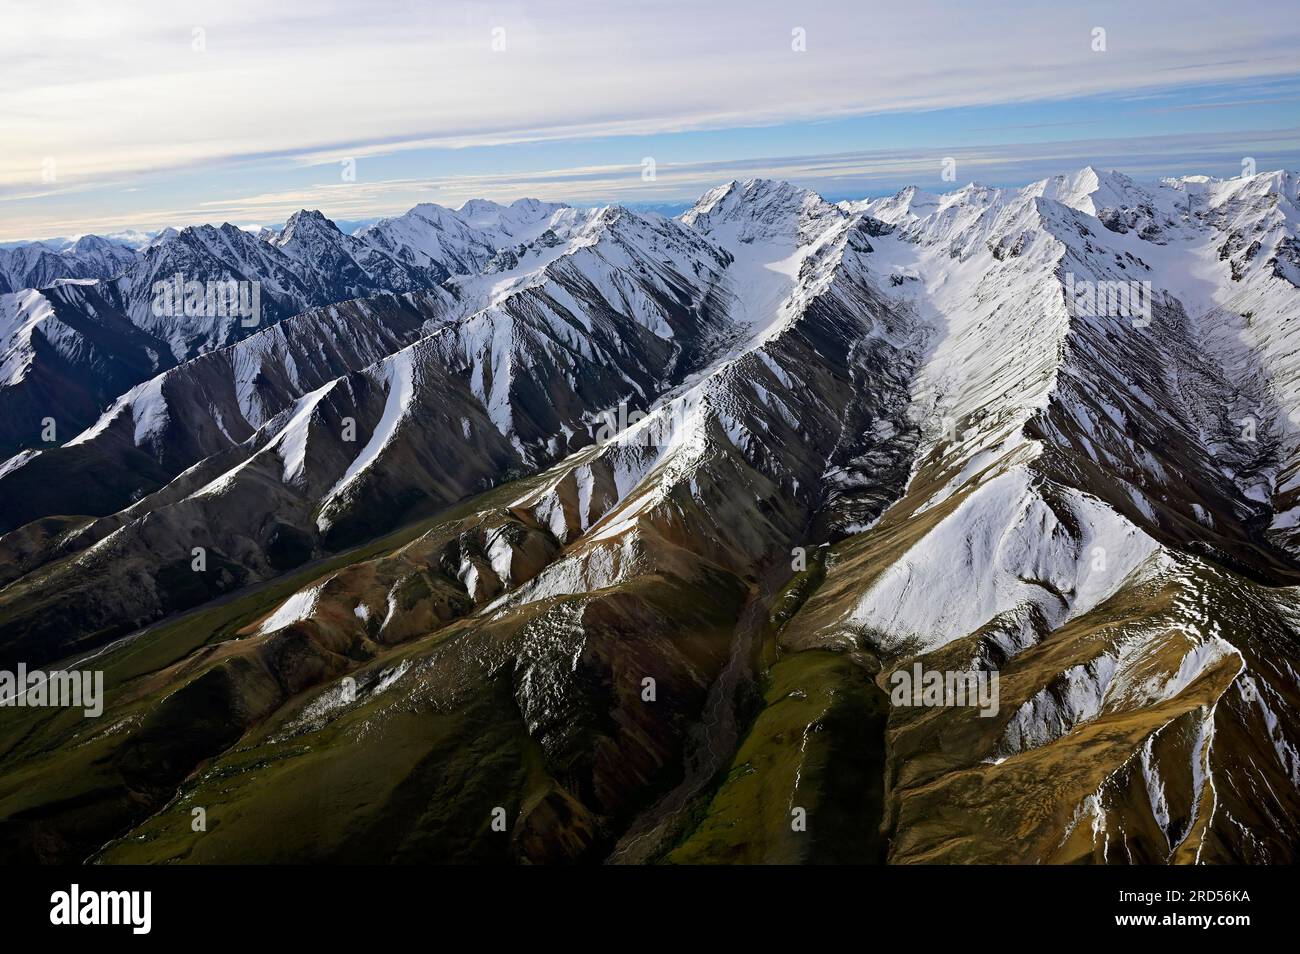 Vue aérienne de la chaîne de montagnes de l'Alaska, Alaska, USA Banque D'Images